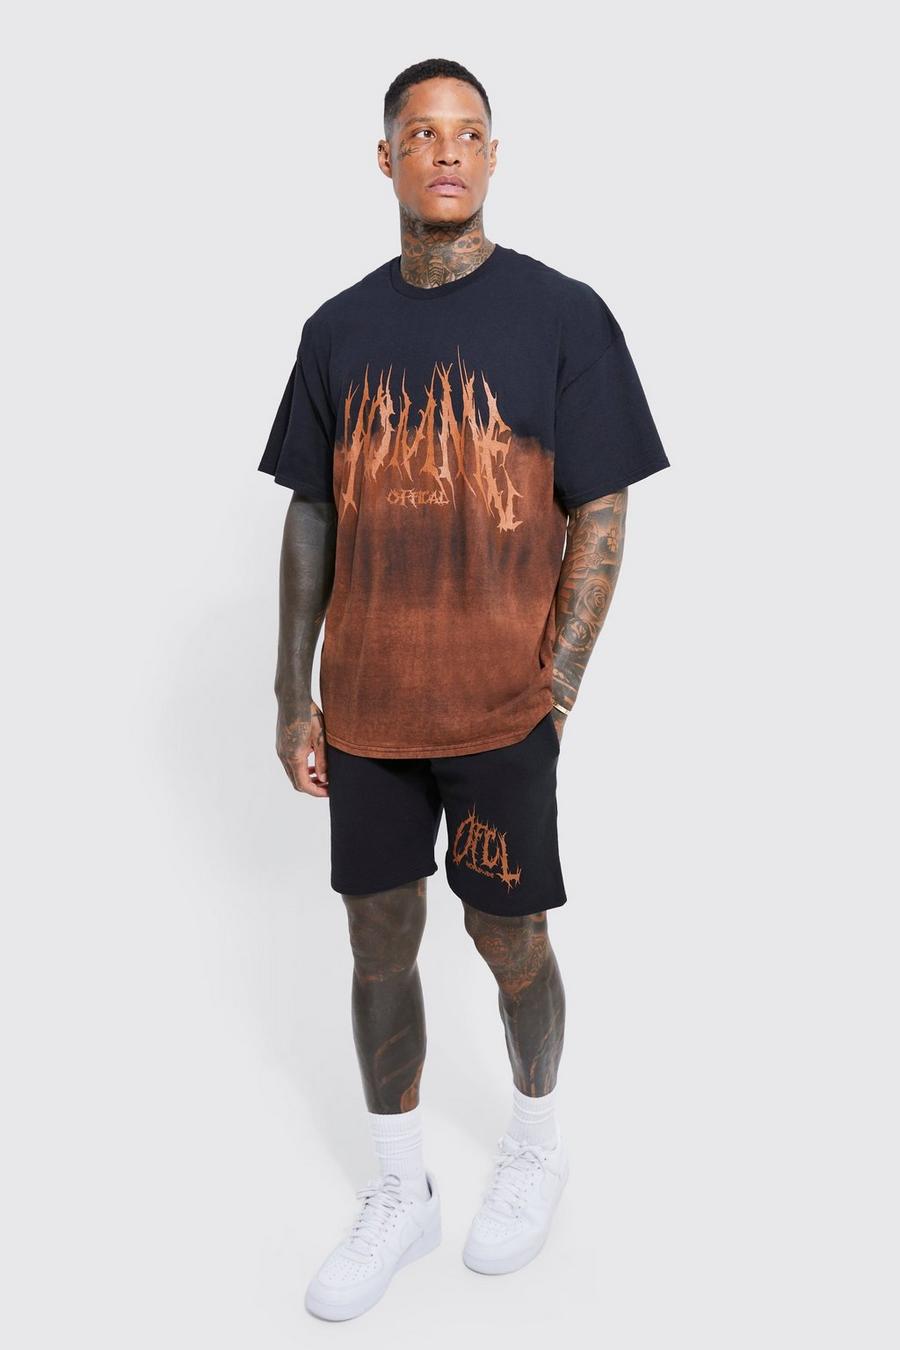 Oversized Ombre Offcl Tie Dye T-shirt Set, Black nero